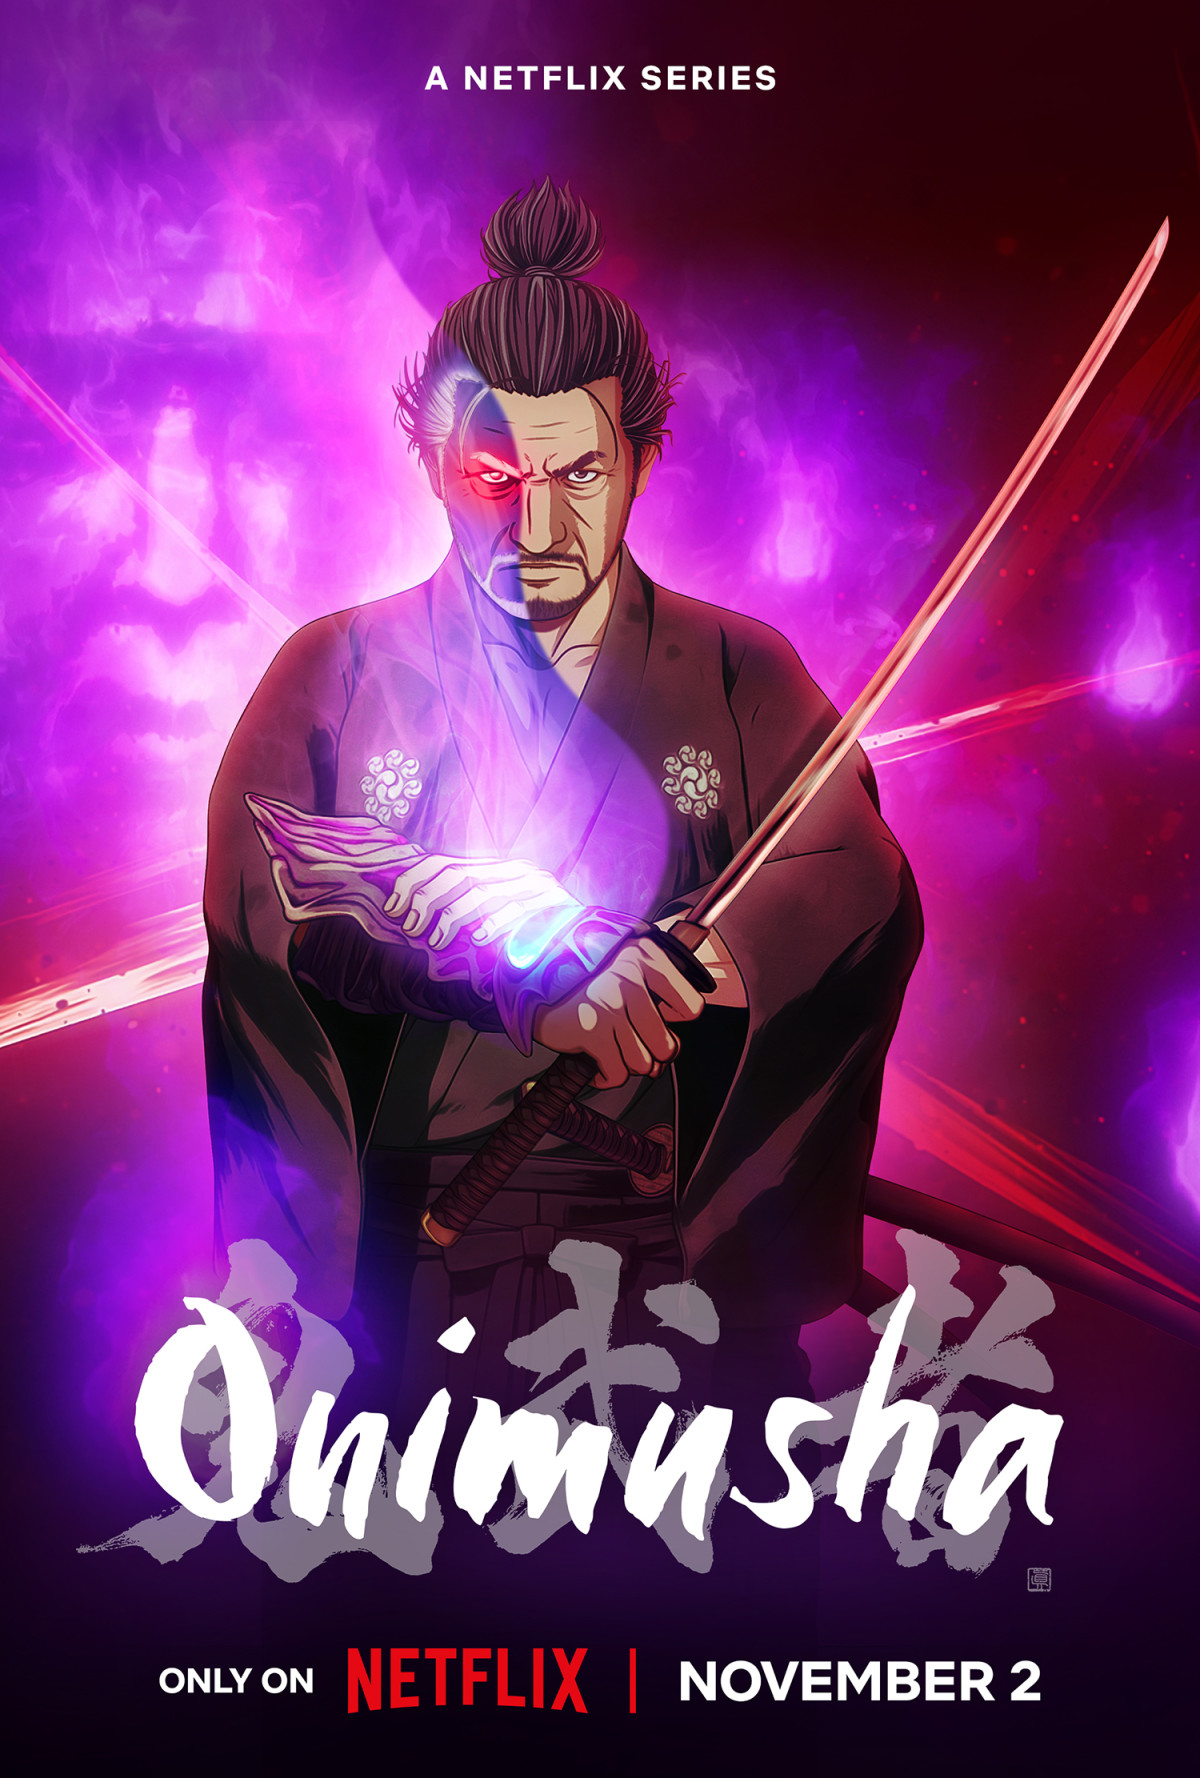 Netflix Onimusha Anime Just Got its First Trailer - IGN